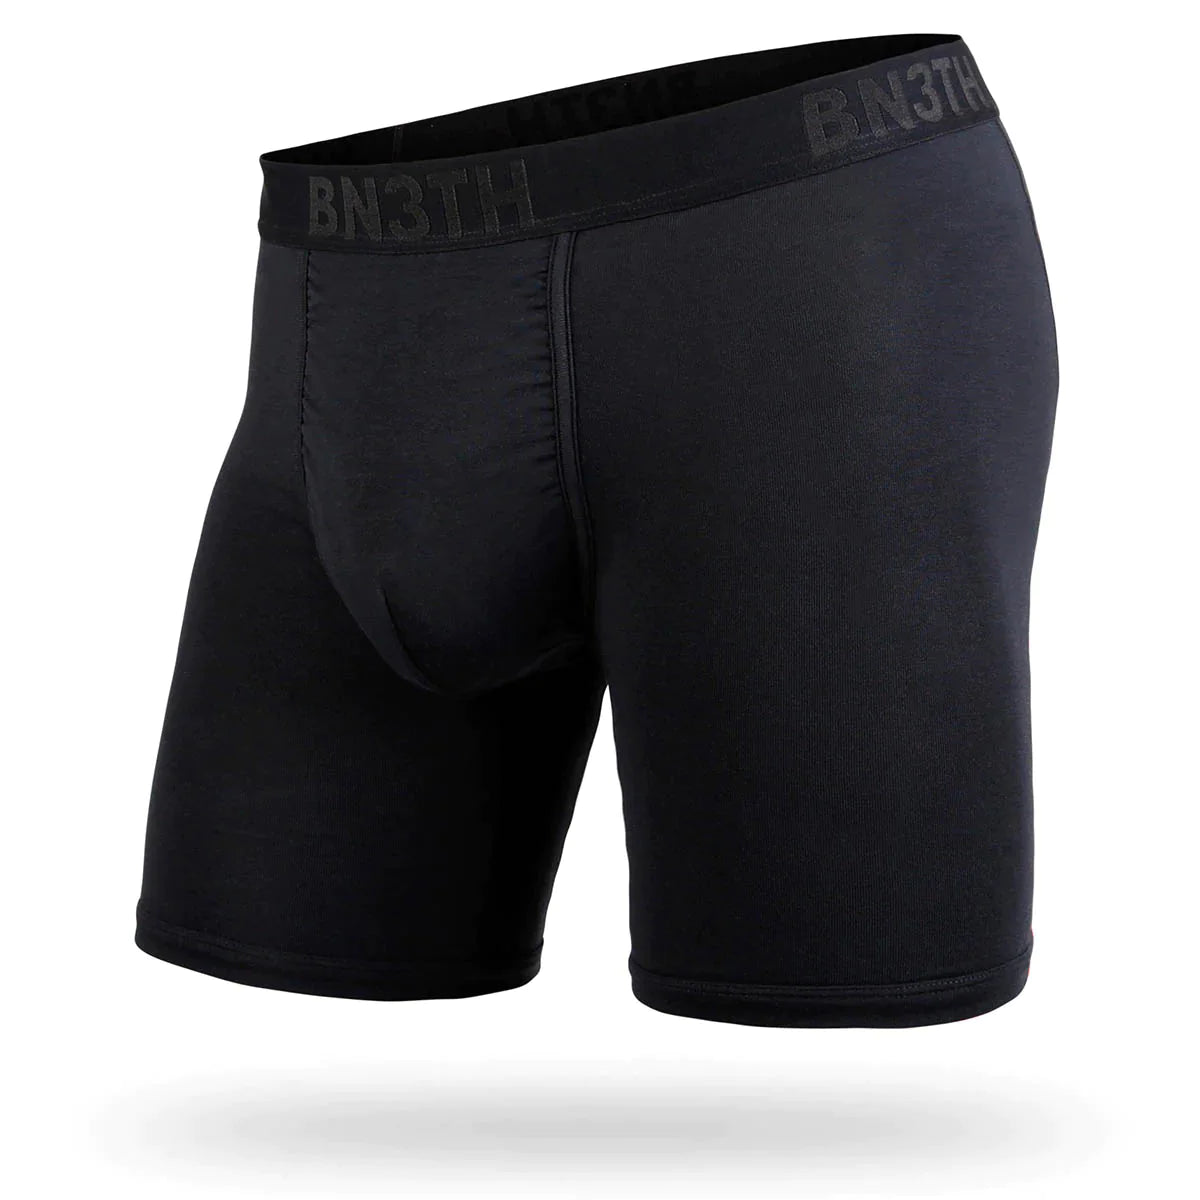 Bn3th - Merino Wool Boxer Brief : Black 